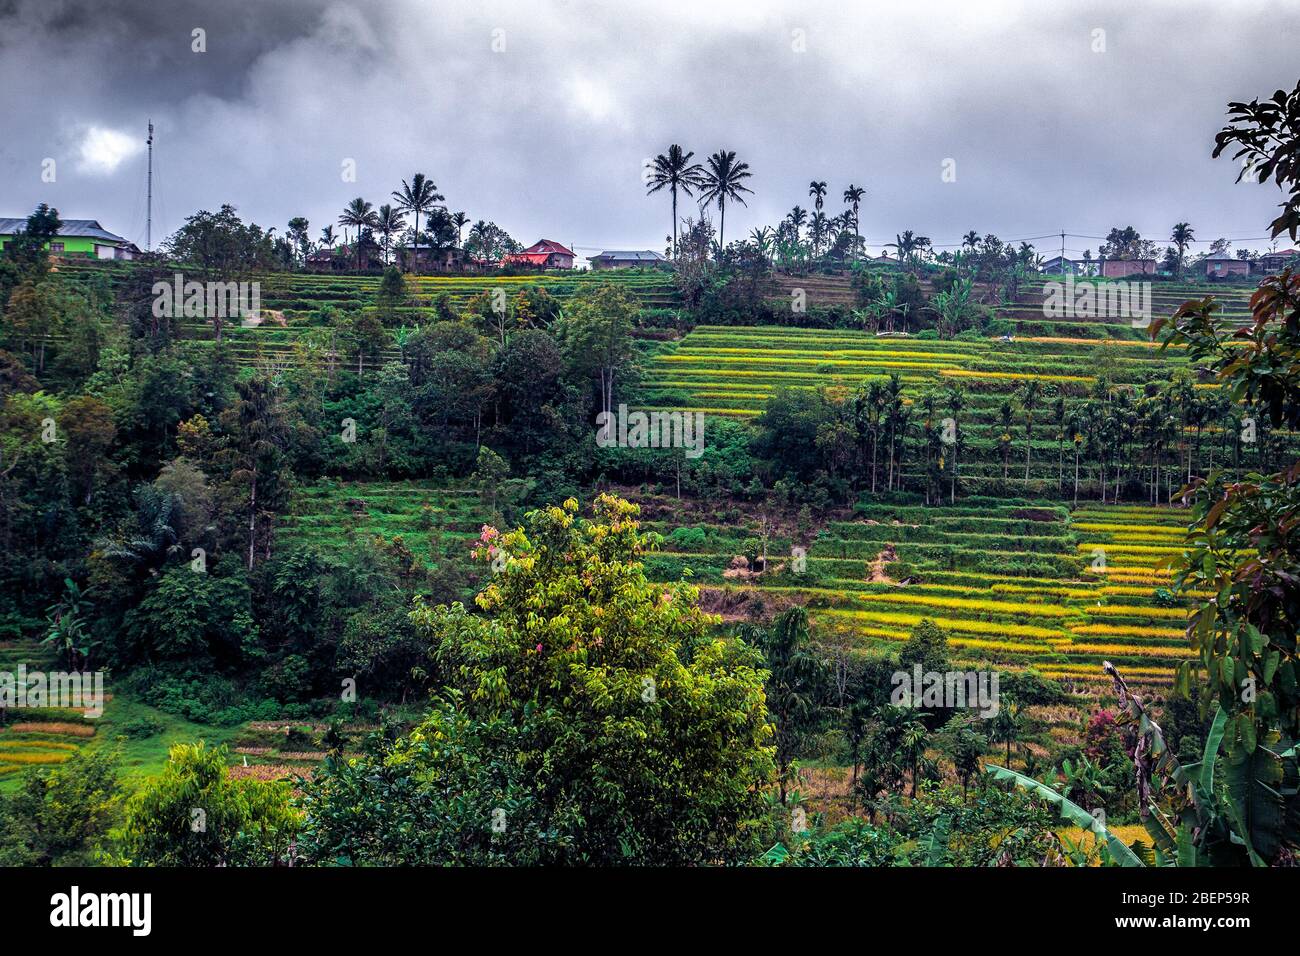 Beautiful tiered rice fields in small village (Malalak) West Sumatra, Indonesia Stock Photo